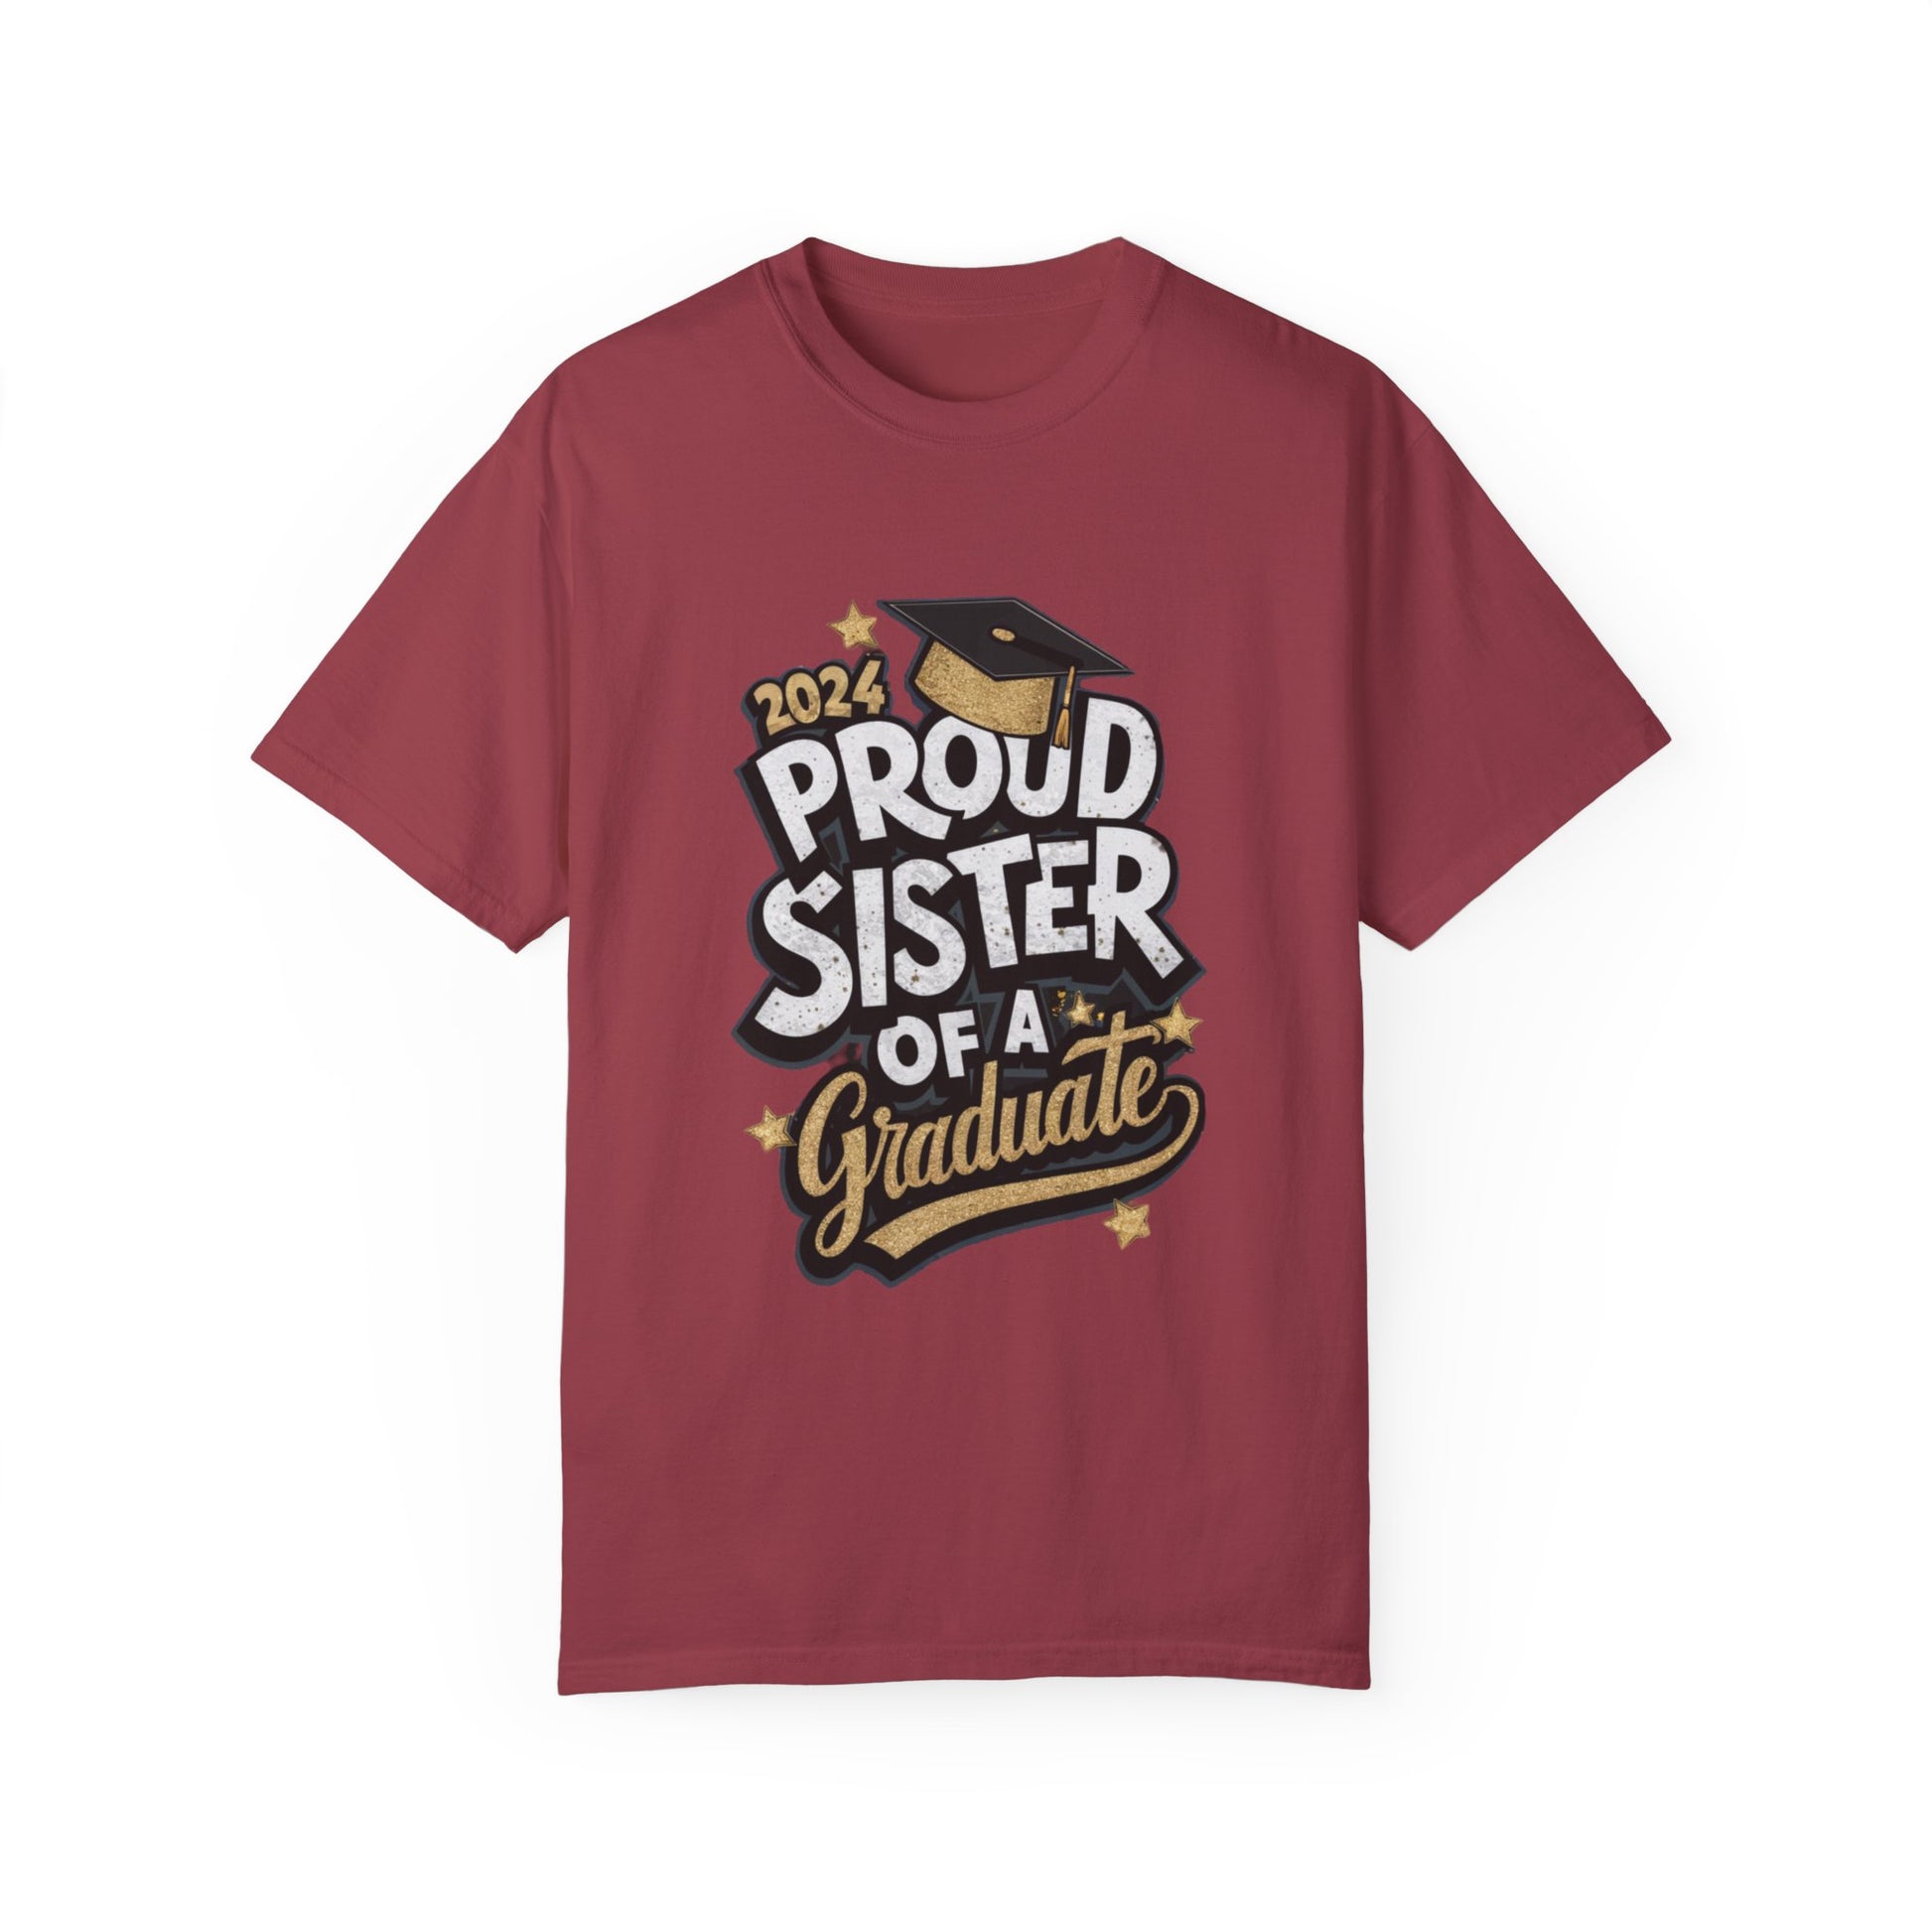 Proud Sister of a 2024 Graduate Unisex Garment-dyed T-shirt Cotton Funny Humorous Graphic Soft Premium Unisex Men Women Chili T-shirt Birthday Gift-7